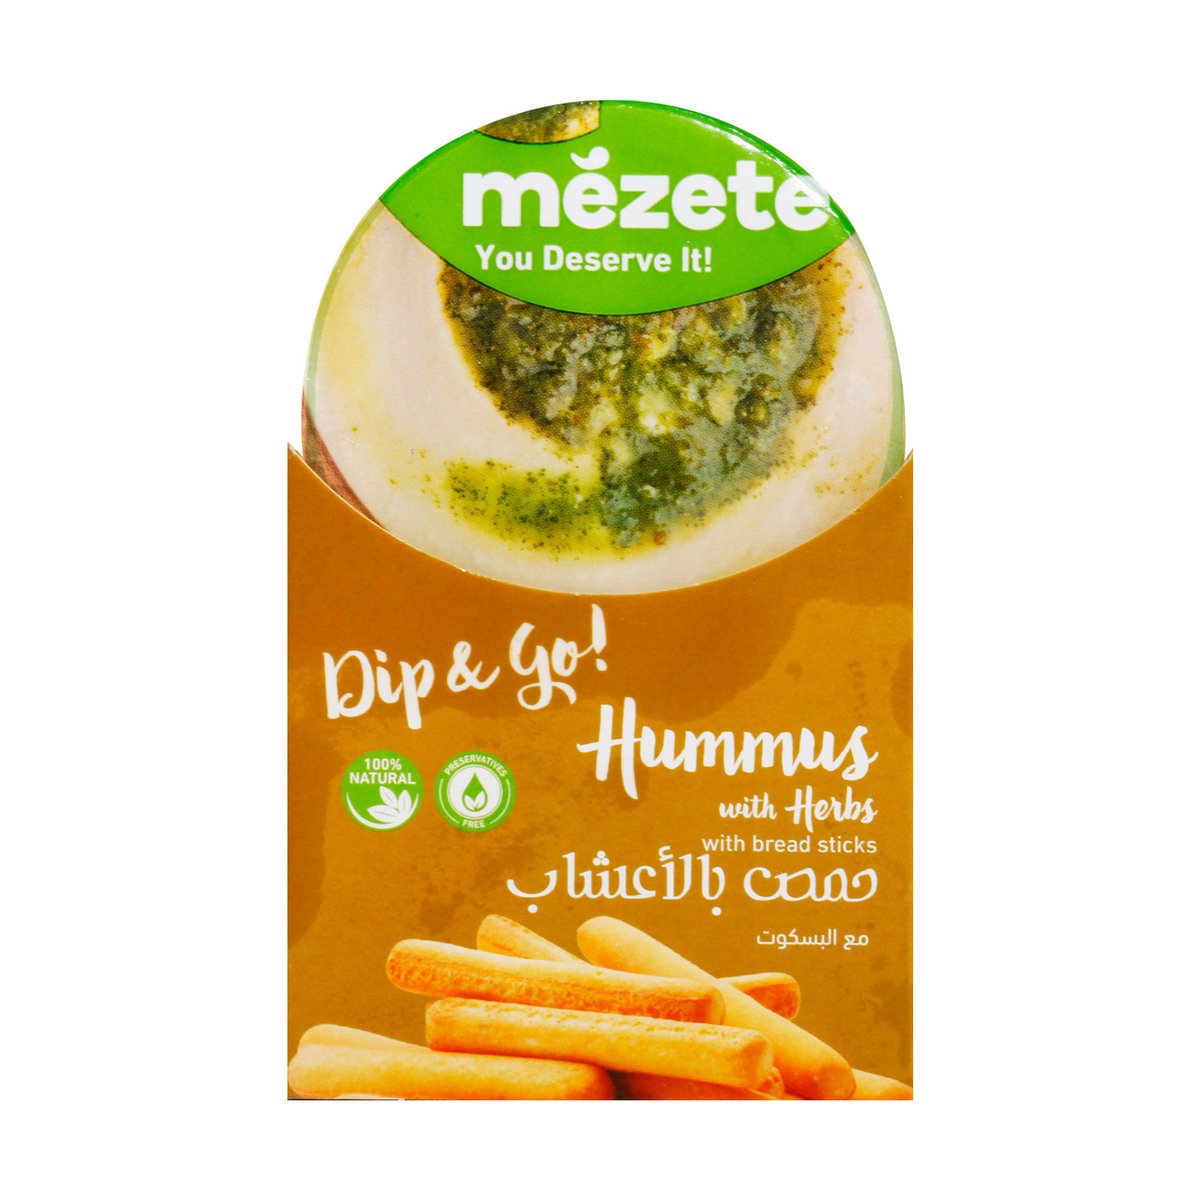 Mezete Hummus With Herbs With Bread Sticks 92g